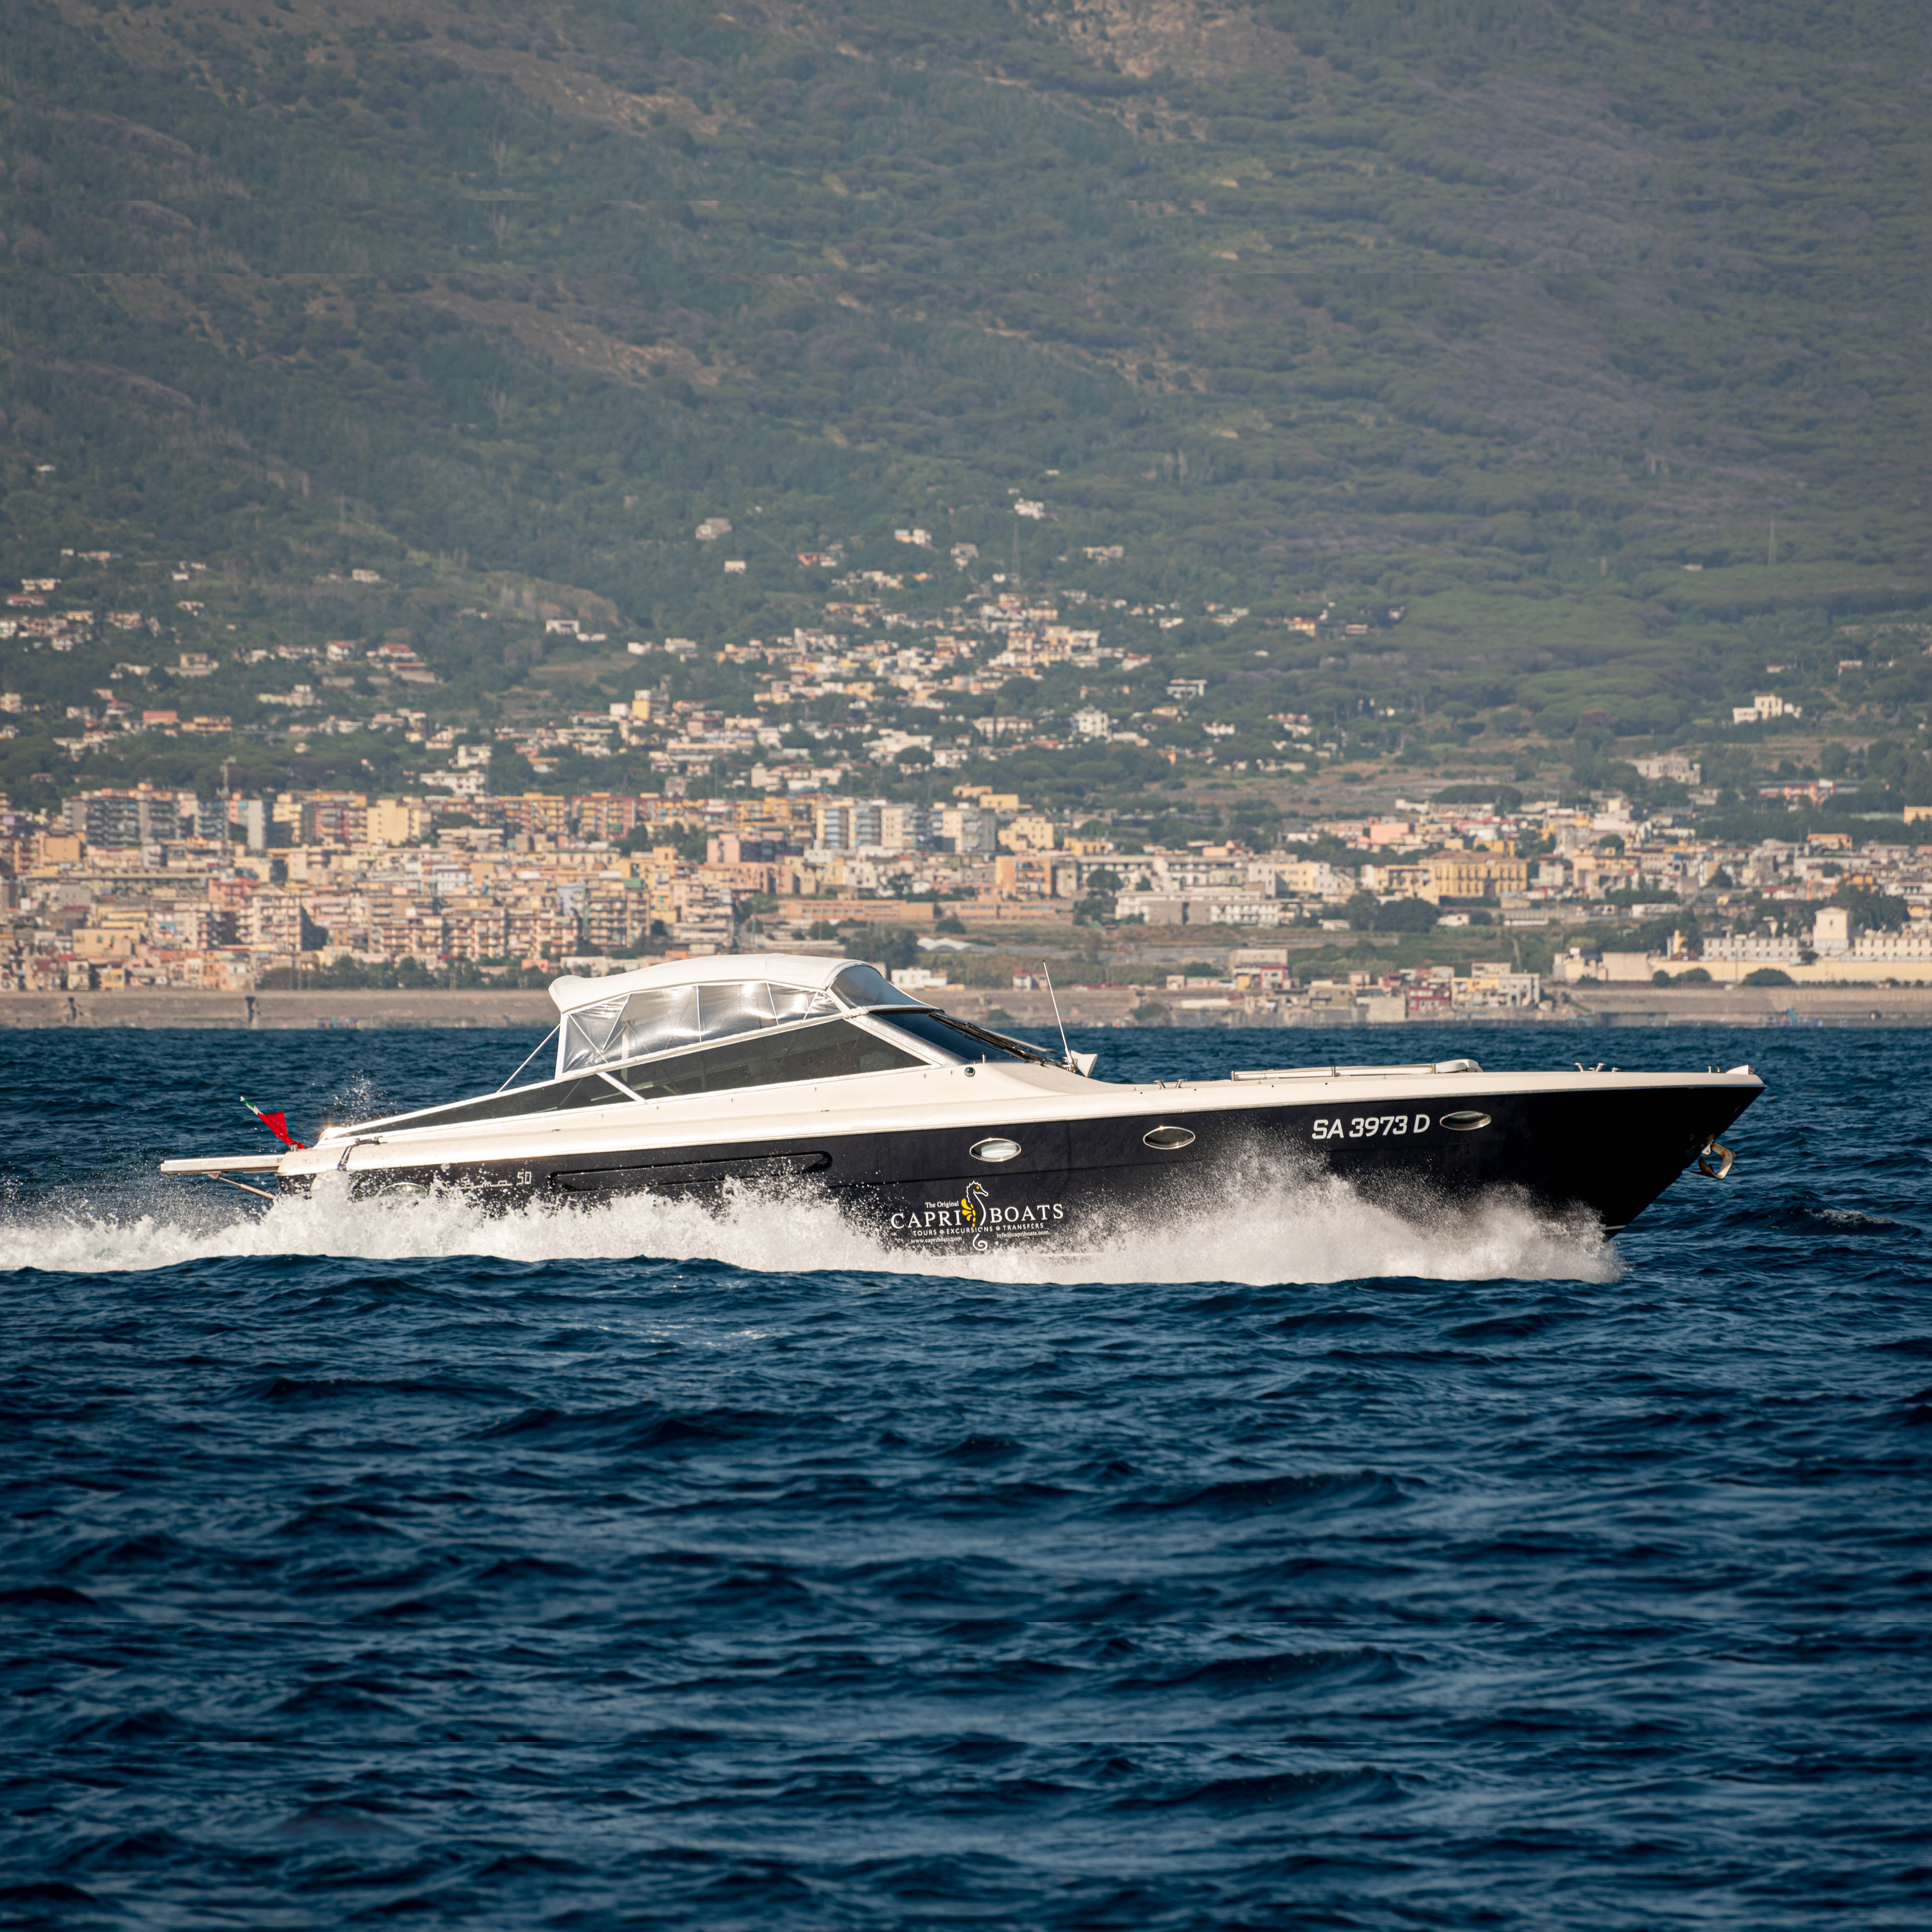 Capri Boats - Exquisite energy